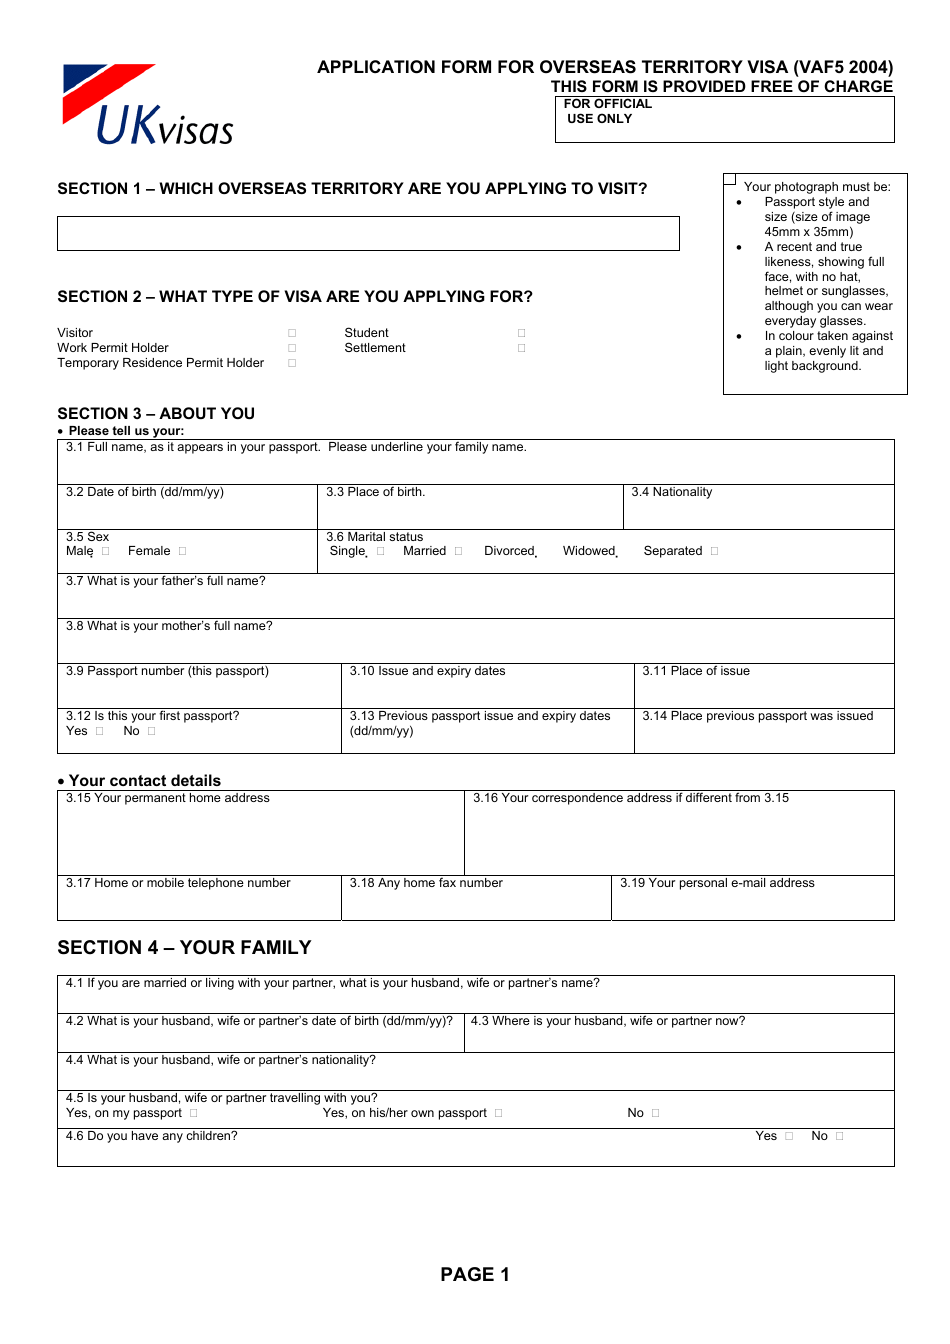 Form VAF5 Visa Application Form for Overseas Territory - Cayman Islands Visa Office, Kingston, Jamaica - United Kingdom, Page 1